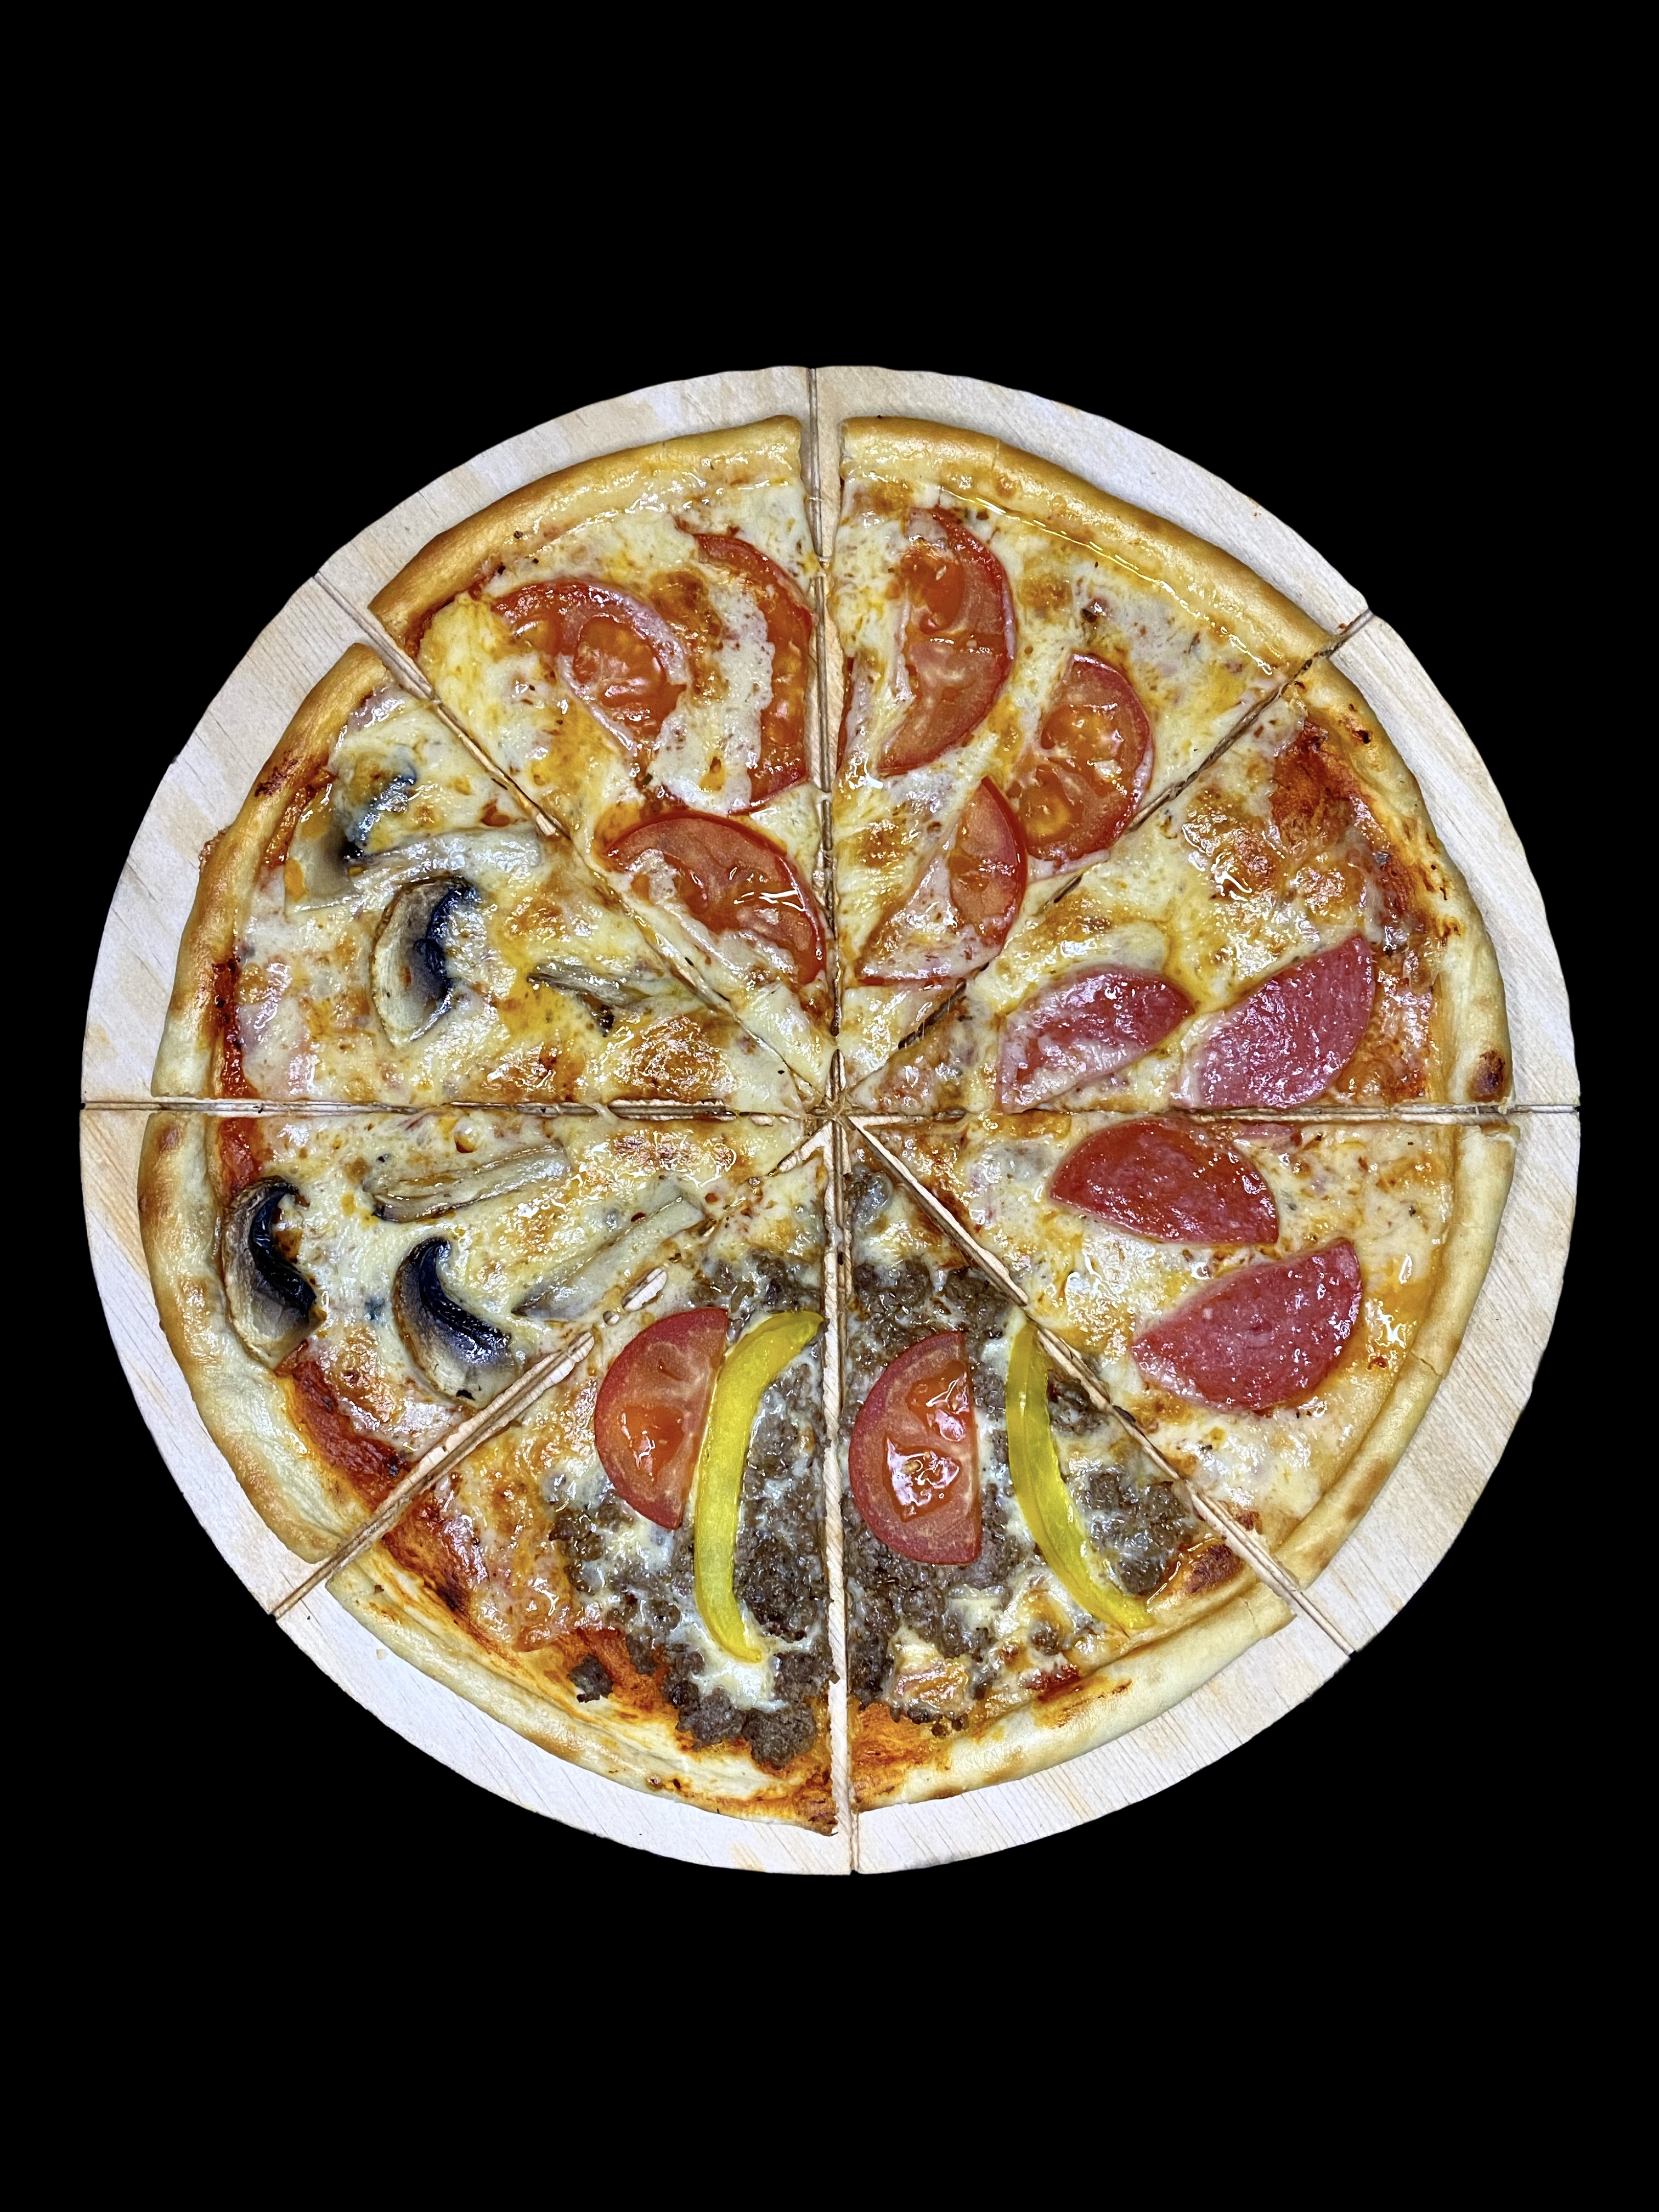 четыре сезона пицца описание фото 115